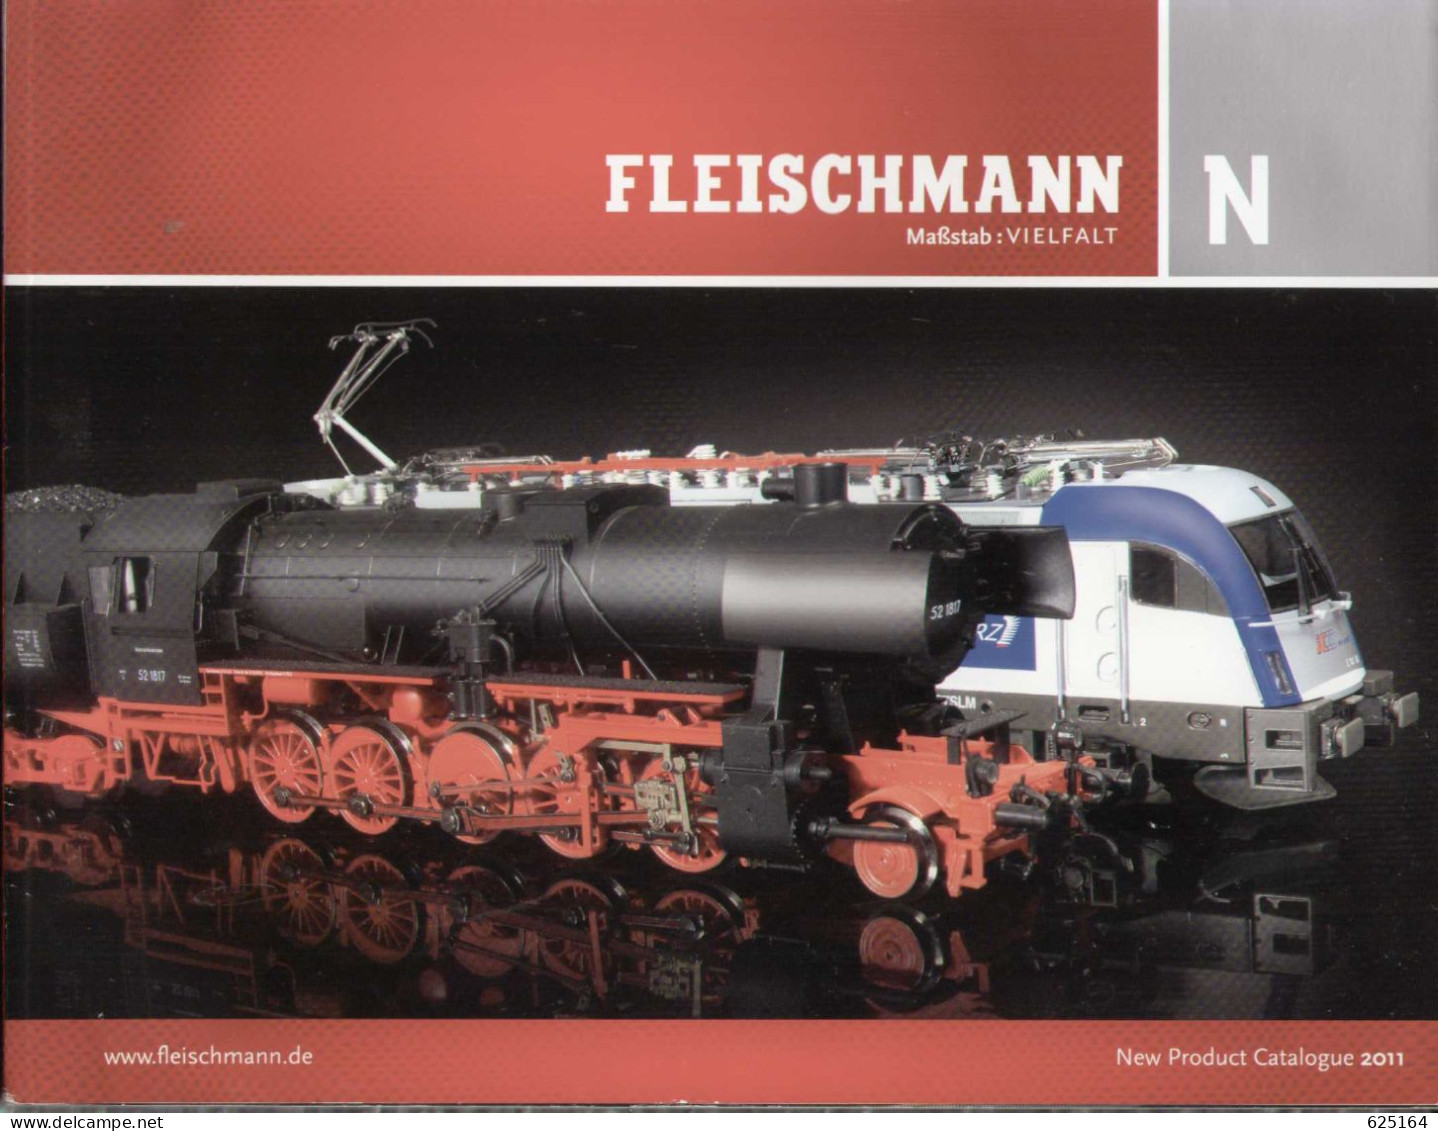 Catalogue FLEISCHMANN 2011 N Maßstab VIELFALT New Product - Deutsch